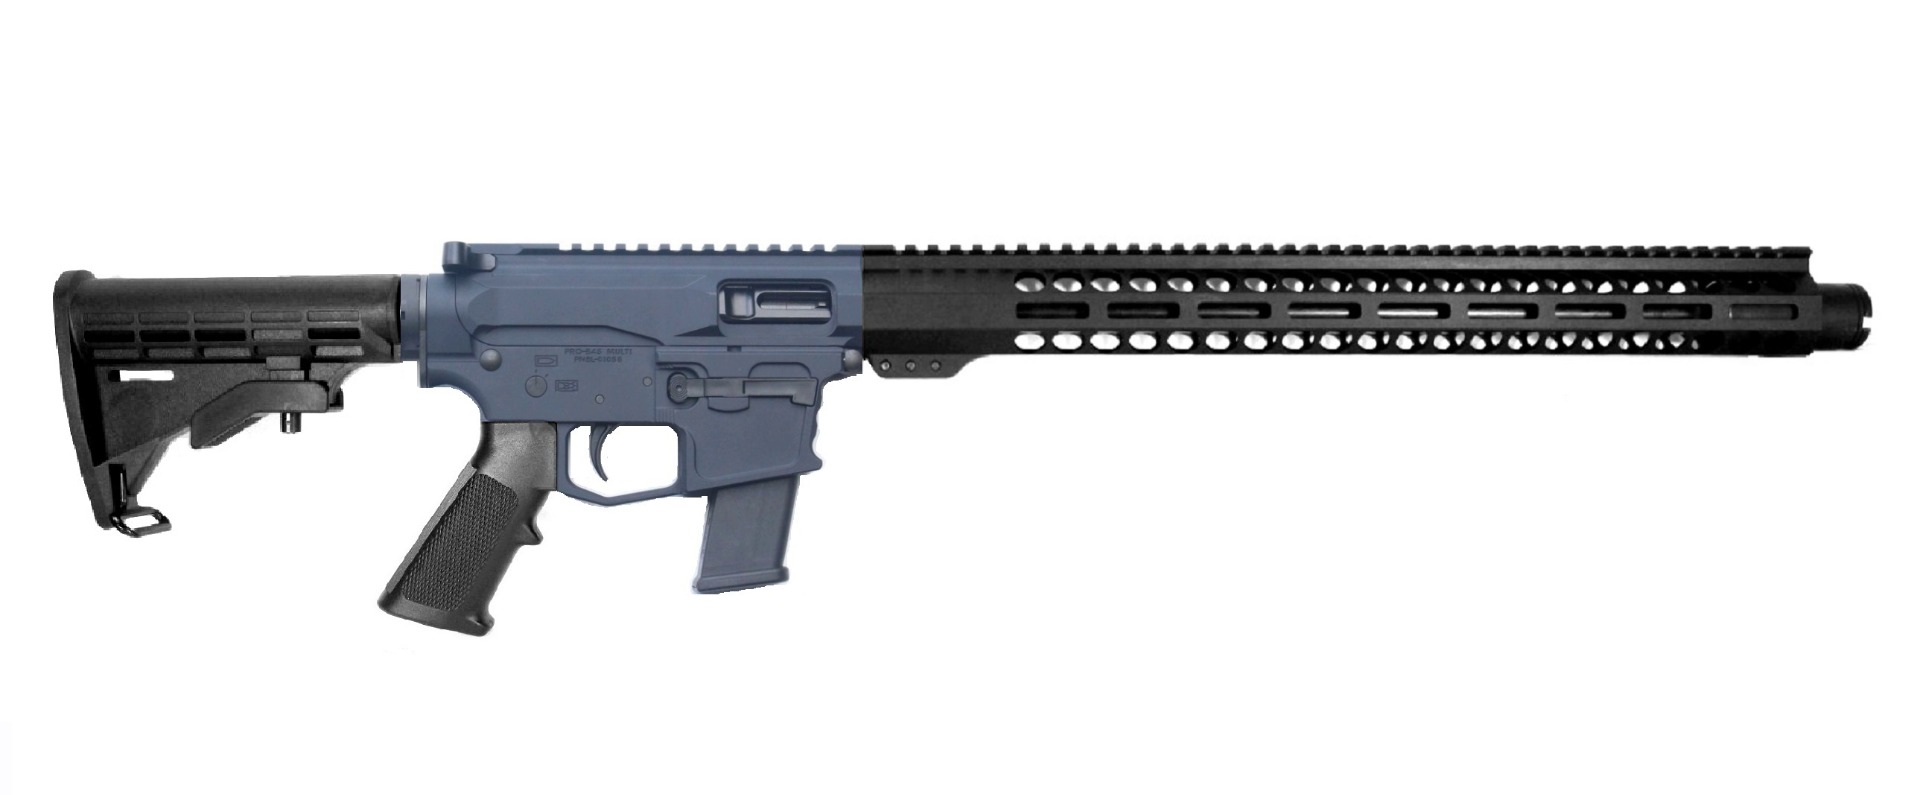 16 inch 9mm Pistol Caliber AR Rifle | Gray & Blk Color 